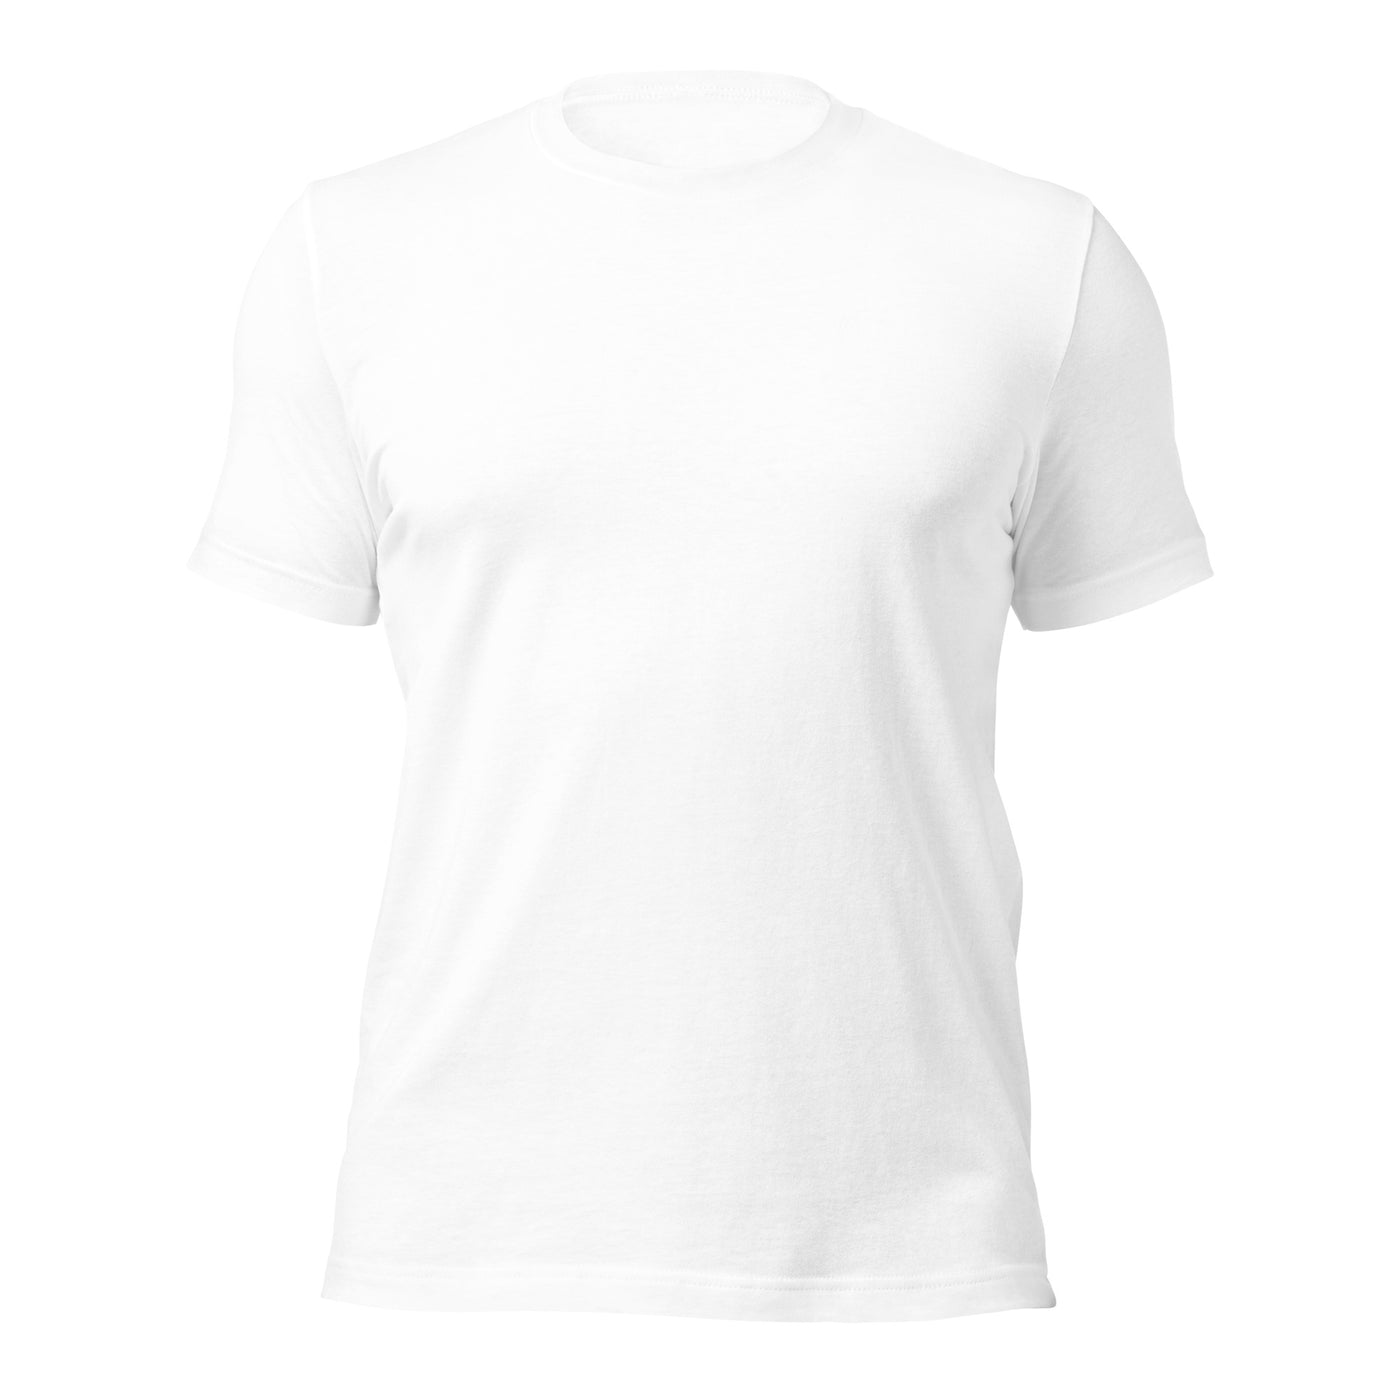 Proud Army Mom - Unisex t-shirt (back print)